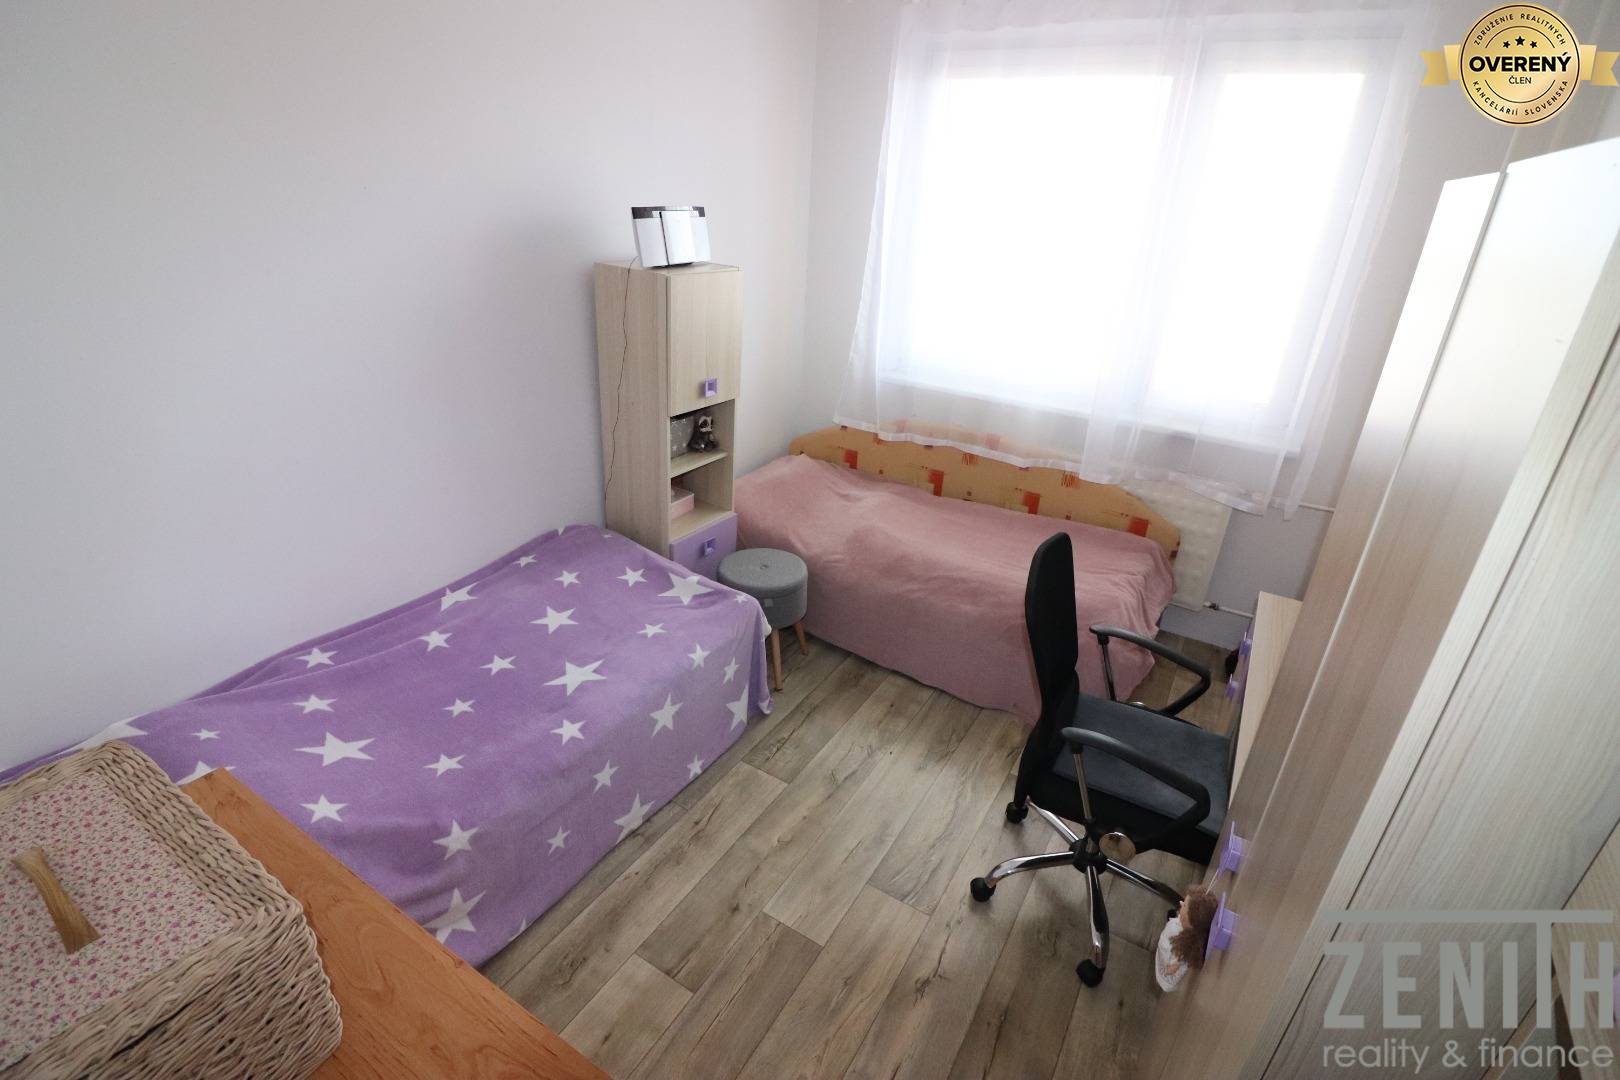 Sale One bedroom apartment, Centrum 2, Ilava, Slovakia